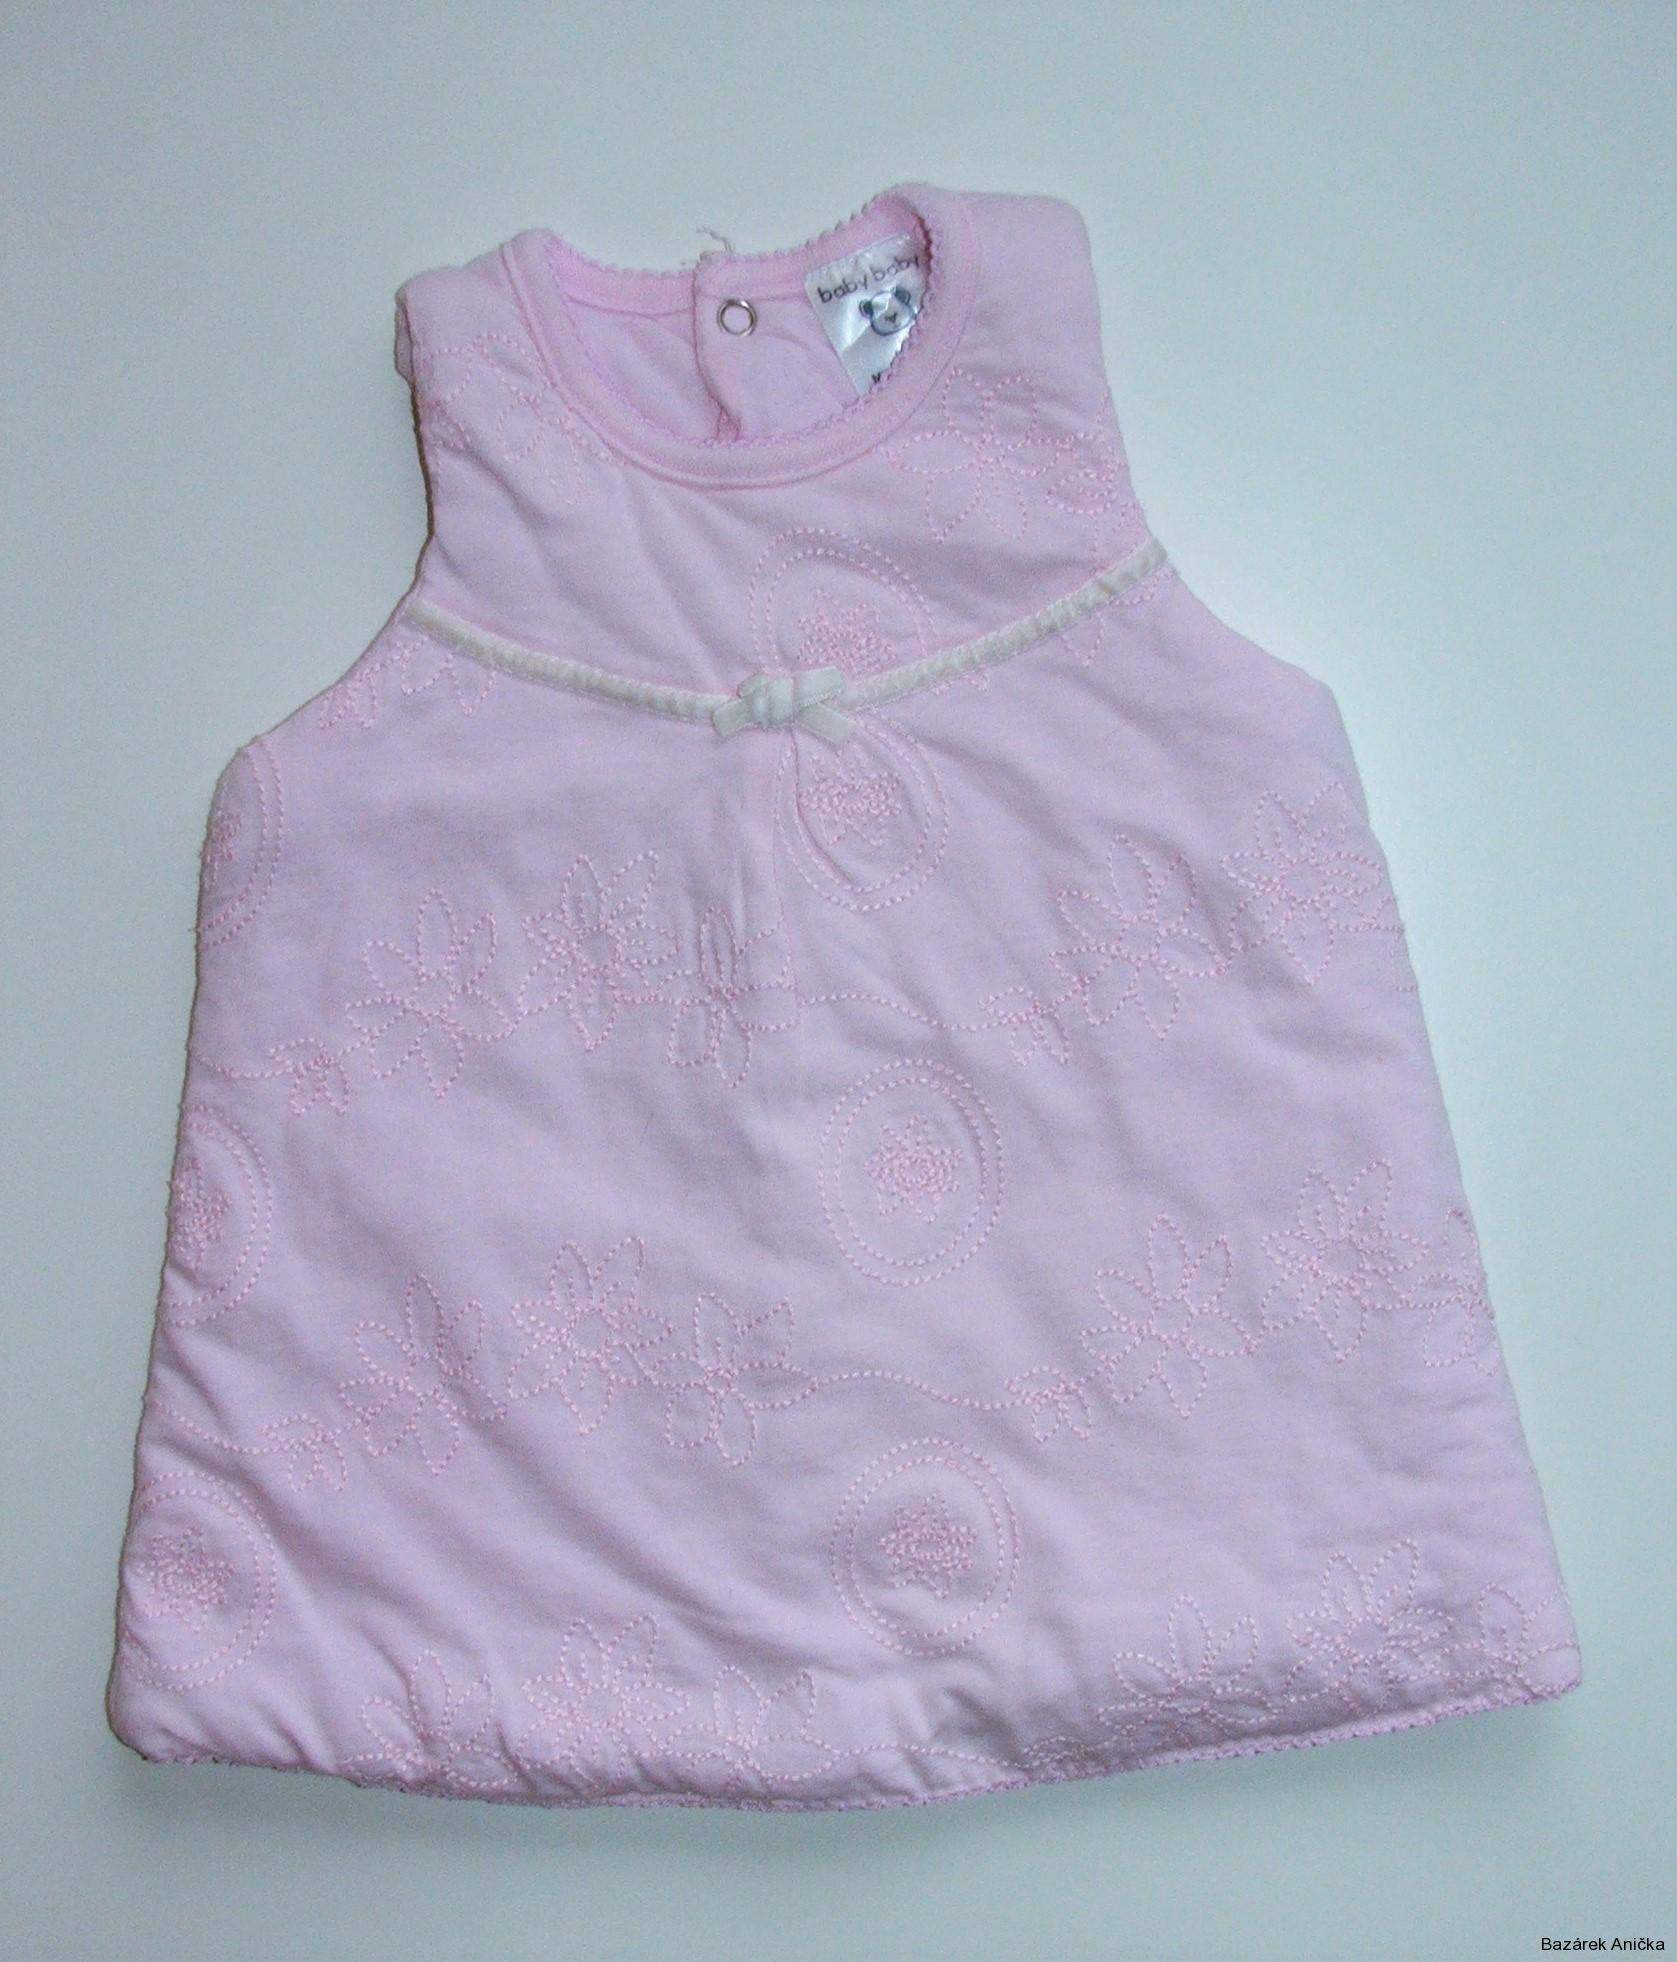 Růžové teplé šaty vel. 74